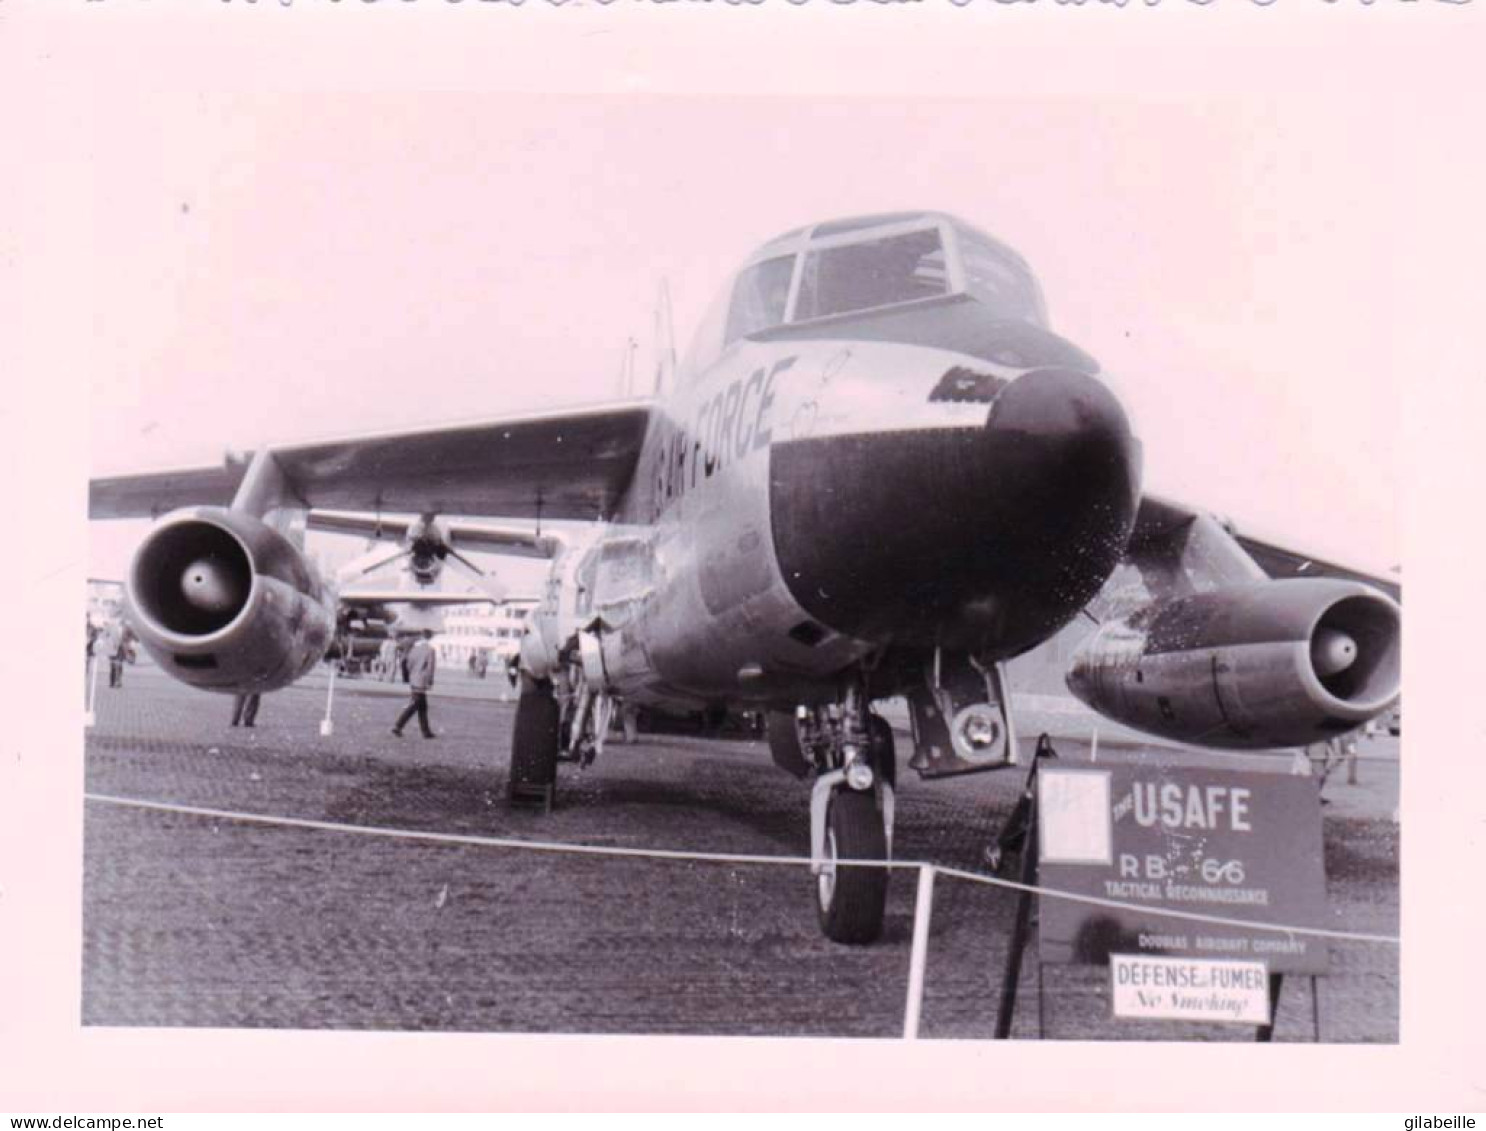 Photo Originale - Le Bourget 1957 -  Aviation - Avion Douglas B-66 - US Air Force - Aviación